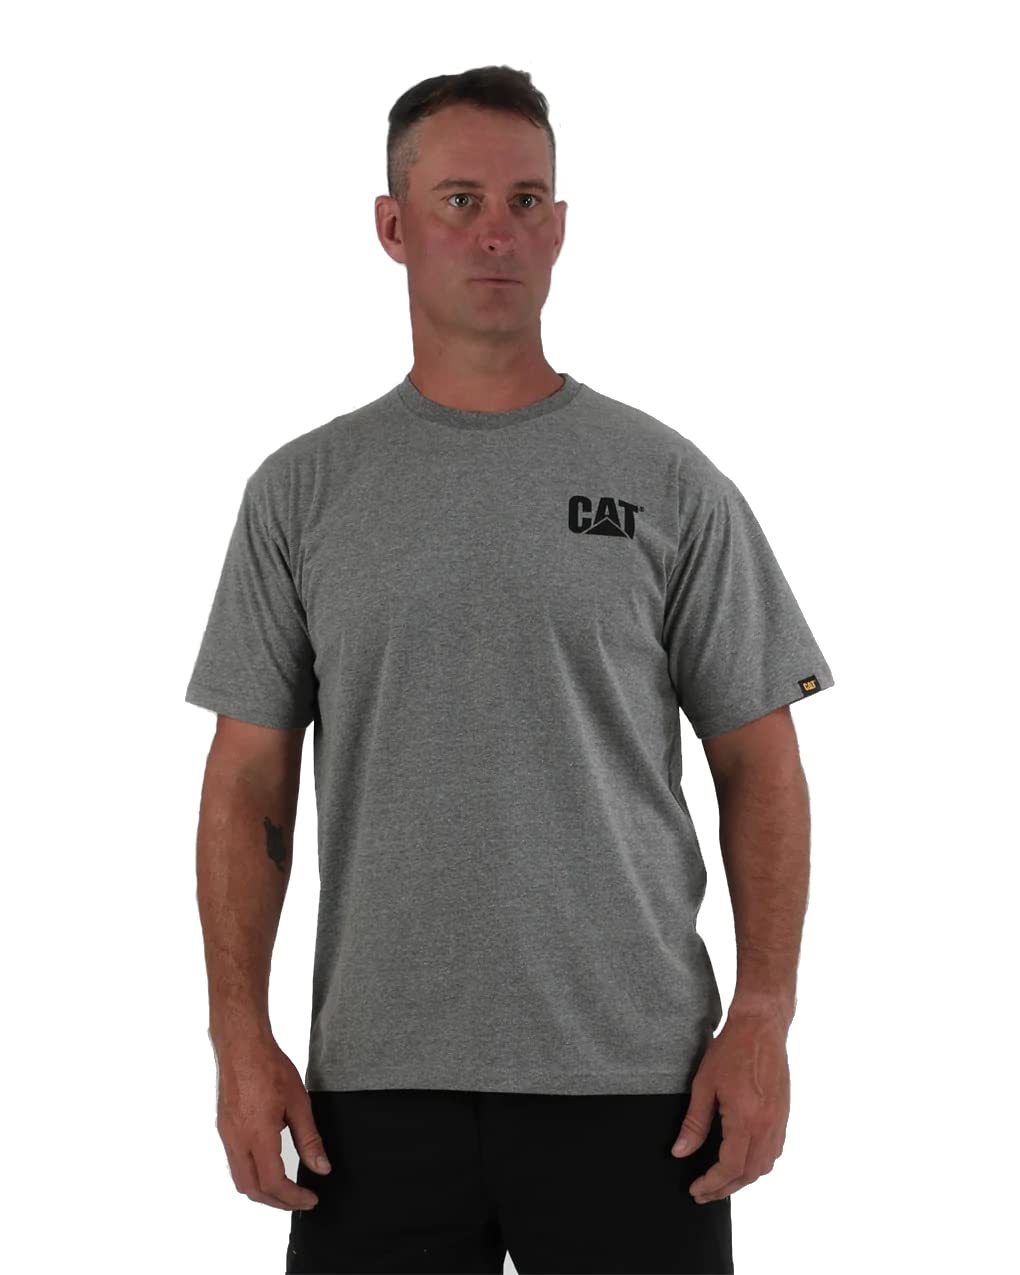 Cat Men's Trademark T-Shirt (Regular and Big & Tall Sizes)